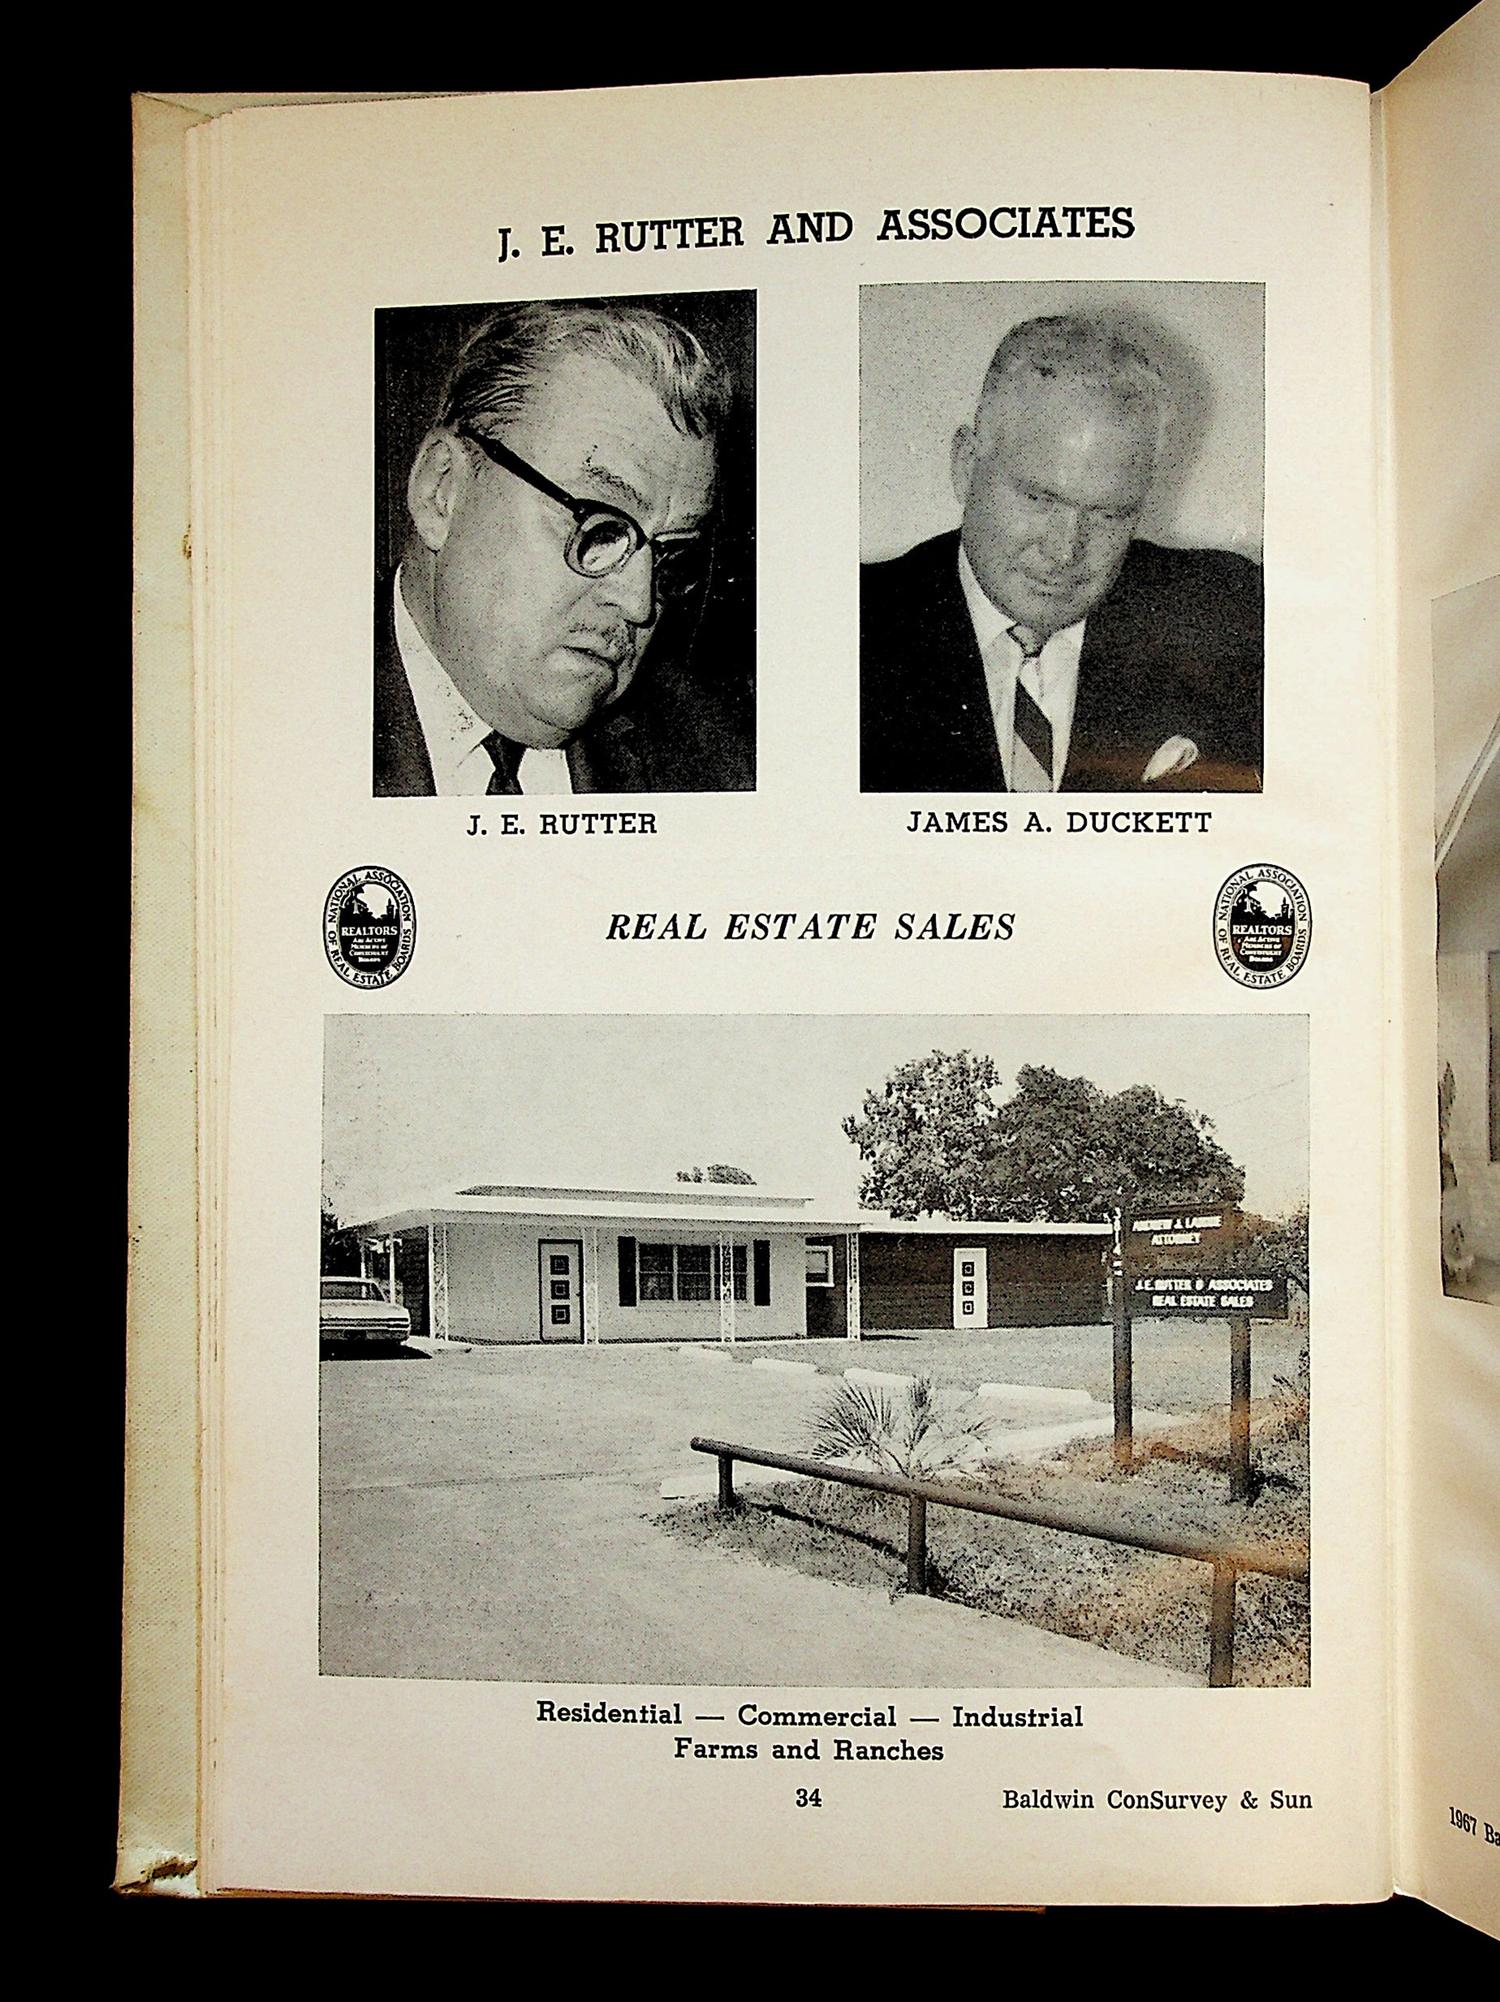 The Baldwin ConSurvey & Baytown Sun Baytown (Including Highlands), Texas City Directory, 1967
                                                
                                                    34
                                                